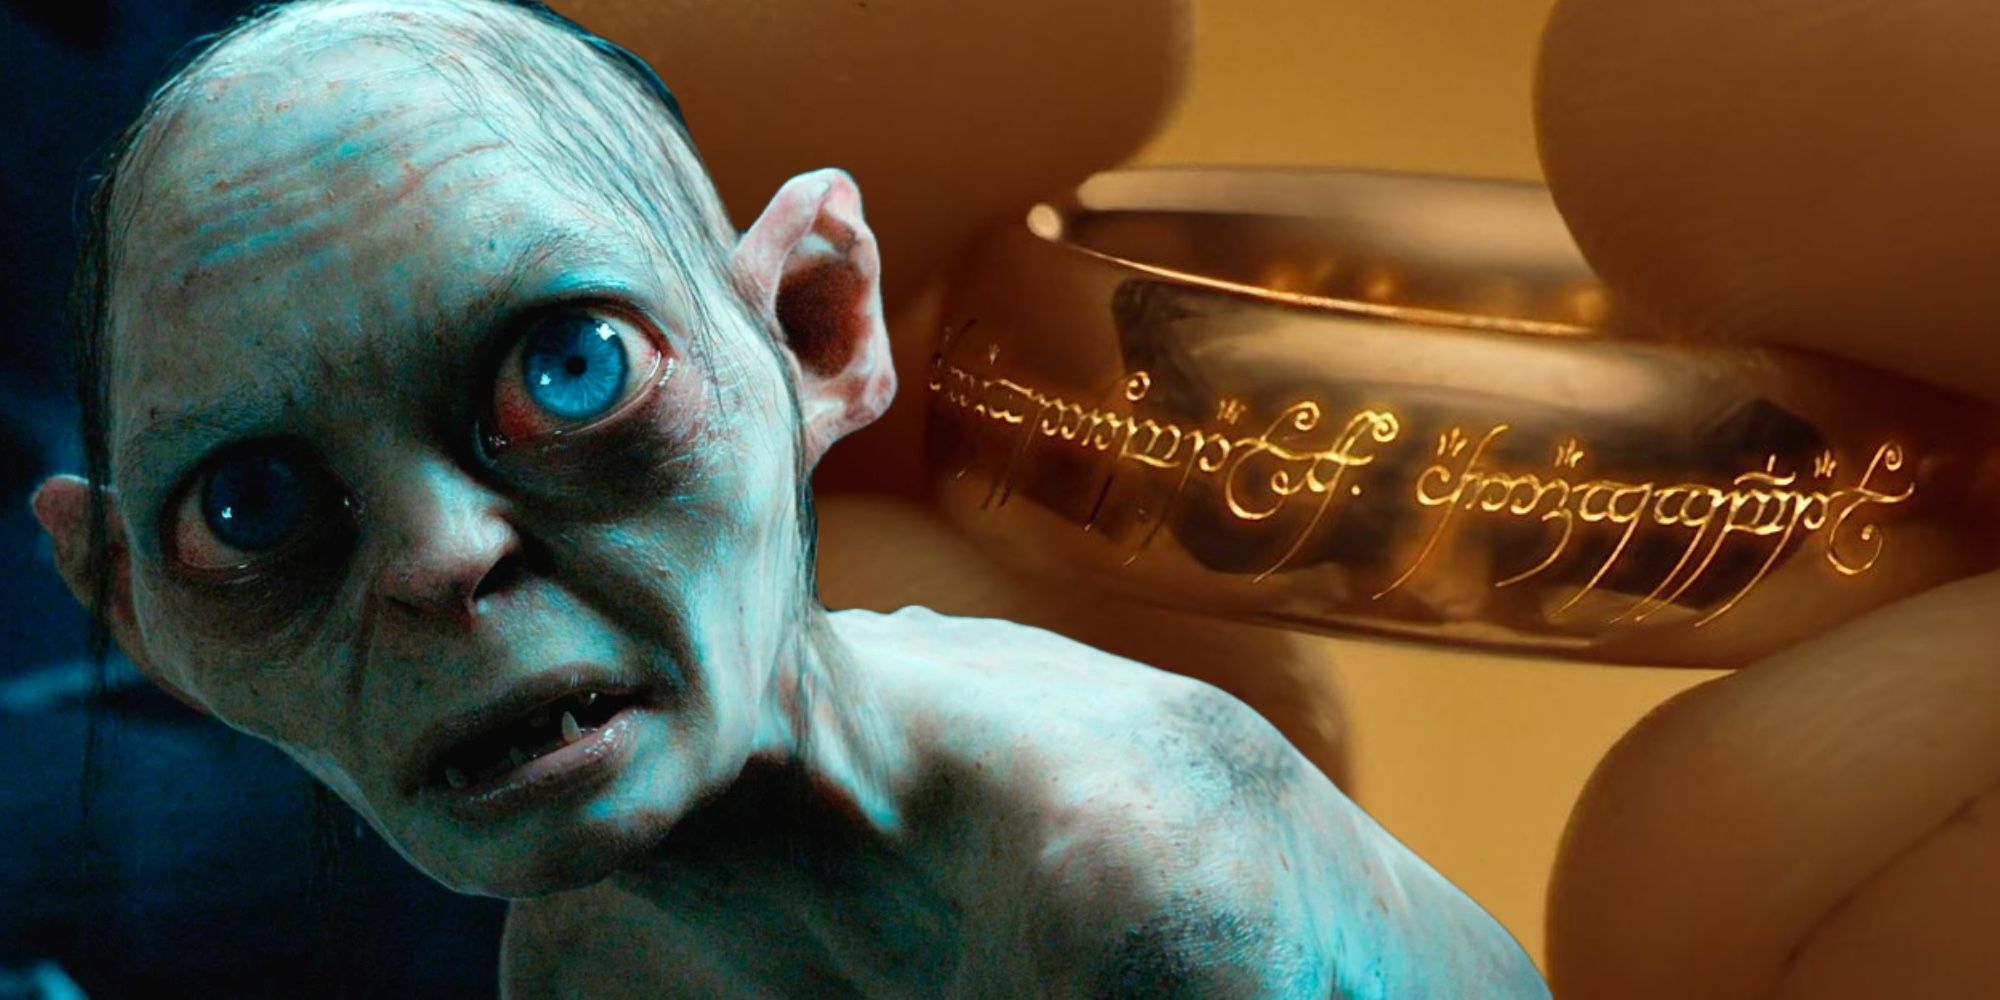 Gambar gabungan Gollum yang tampak sedih di depan close-up One Ring dari The Lord of the Rings